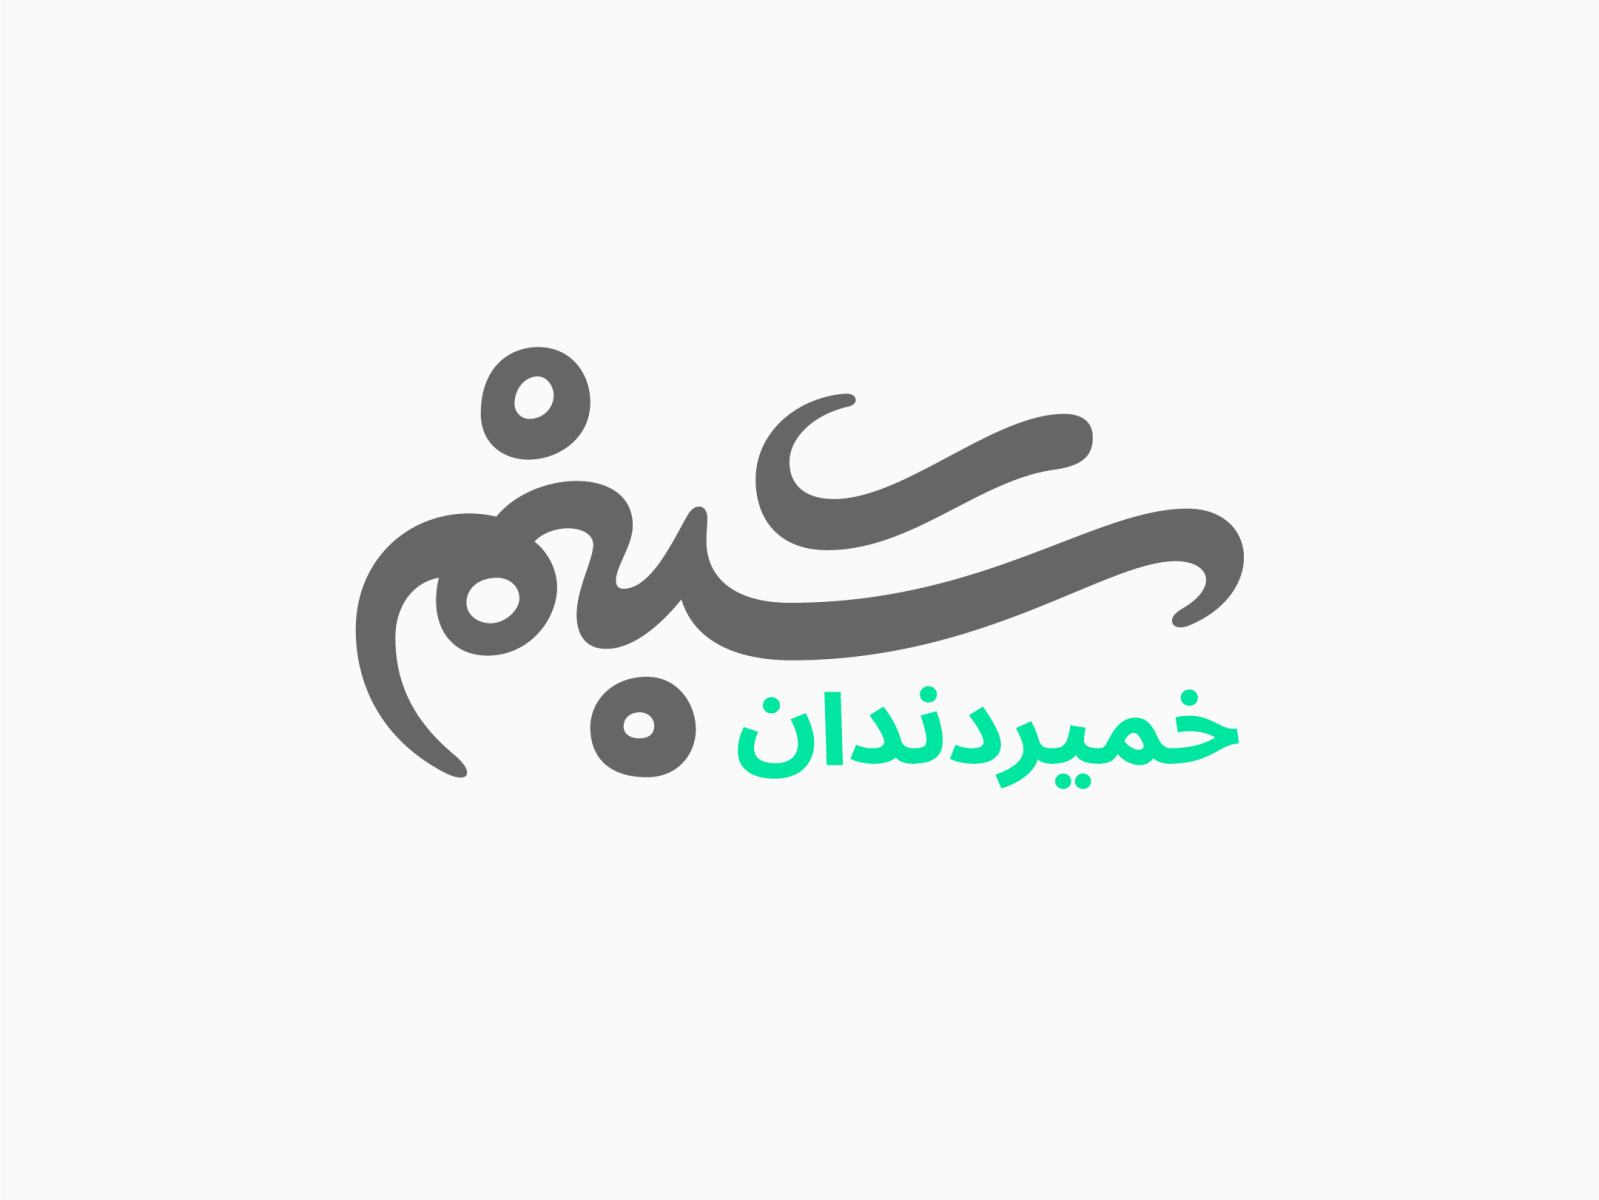 Реклама на арабском. Креативные логотипы. Persian logo. Shabnam logo. Logos in Farsi.